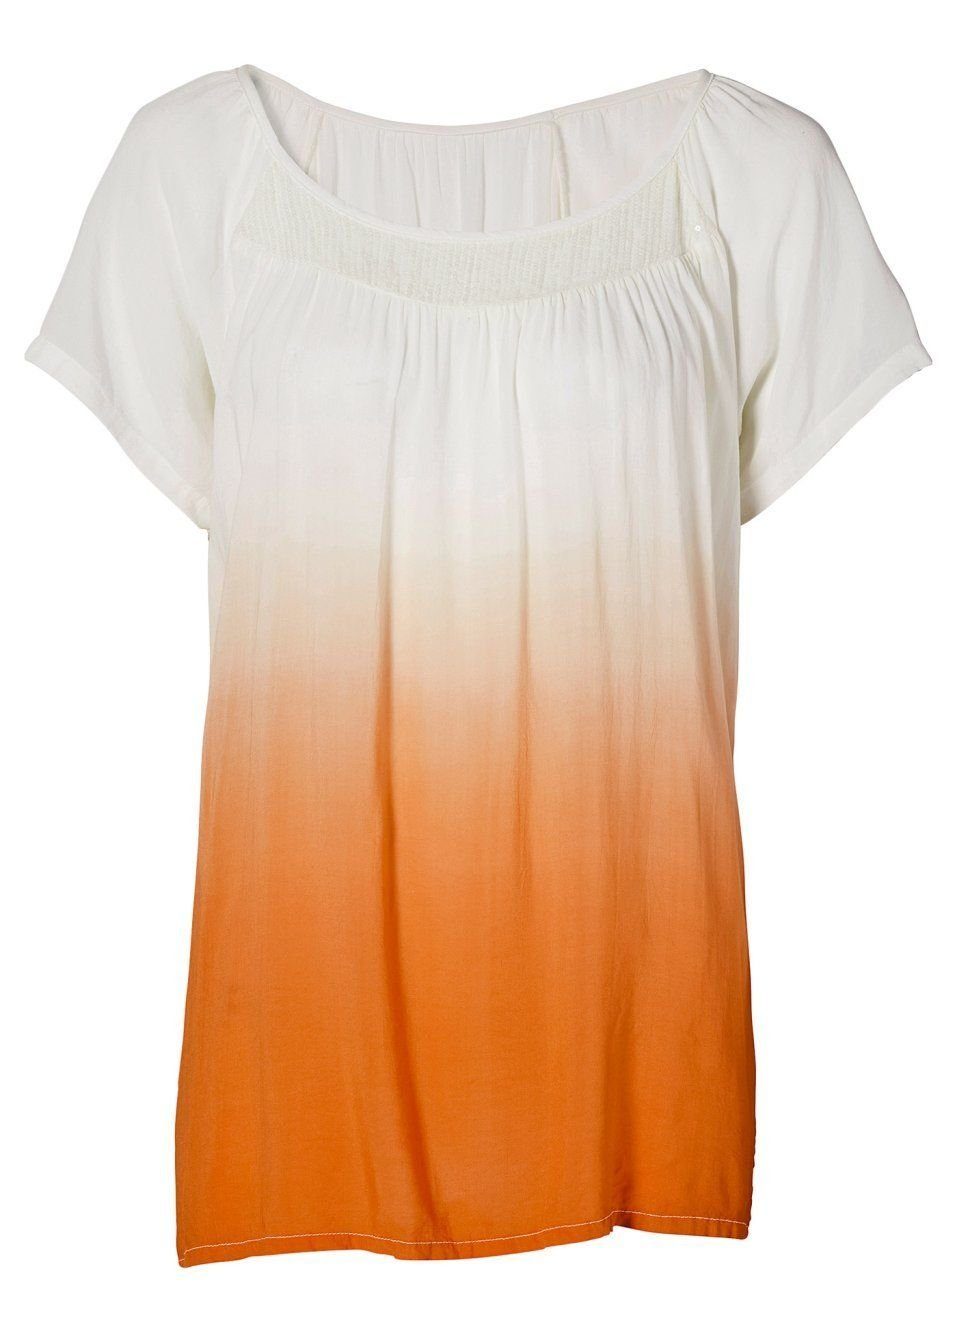 YESET Tunika Tunika Pailletten ecru orange 928589 Bluse Farbverlauf kurzarm Shirt